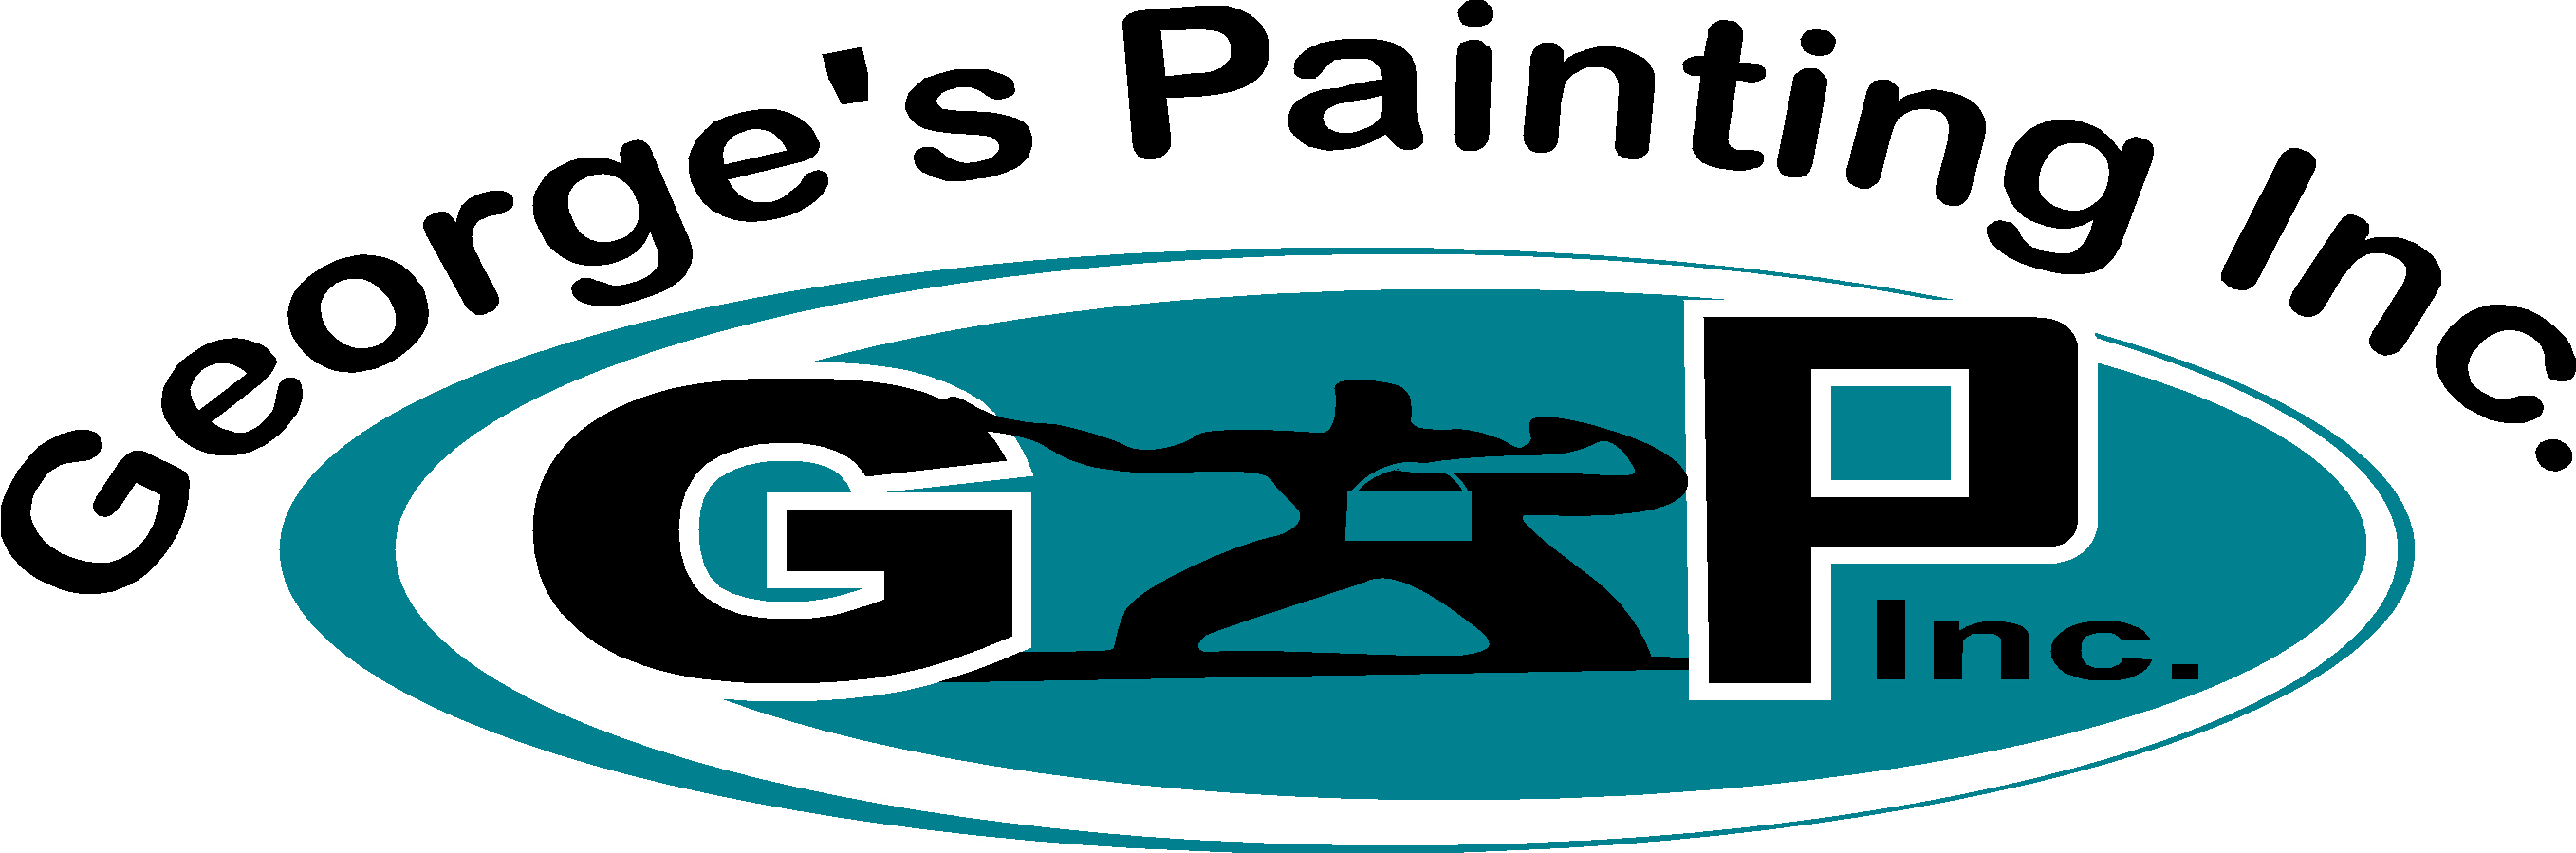 George's Painting, Inc. Logo